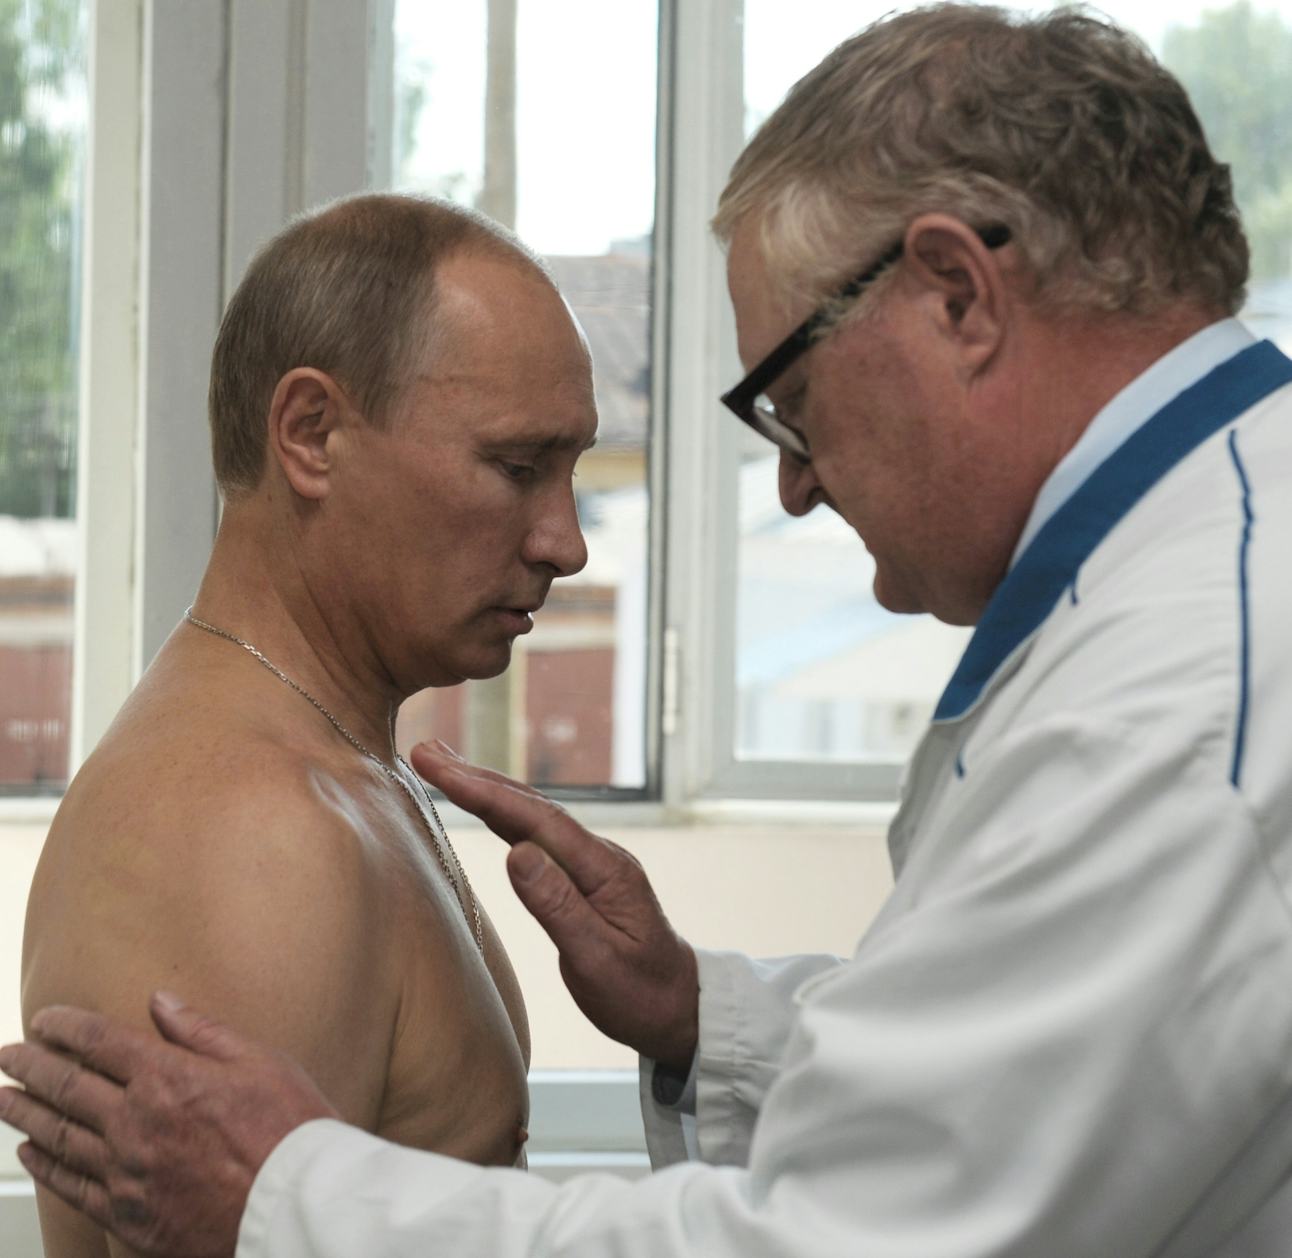 Where In The World Is Vladimir Putin 5 Theories Ranked By Likelihood